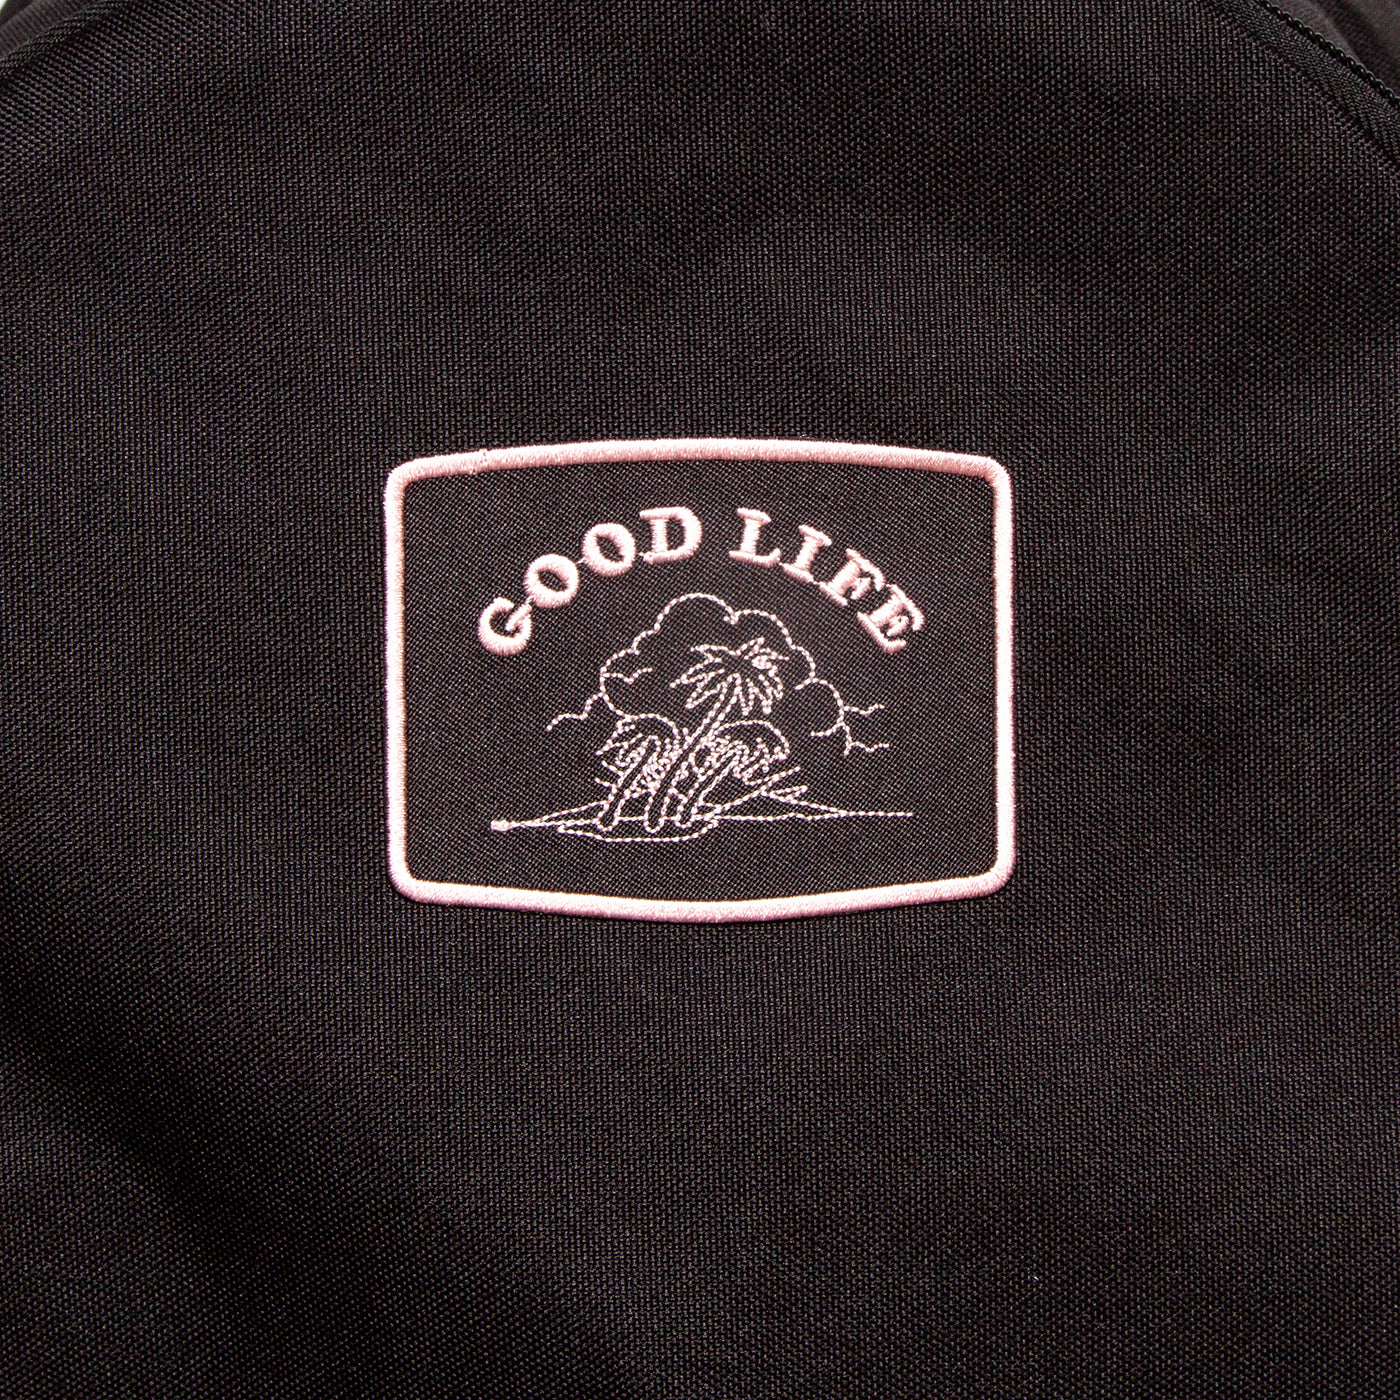 Good Life - Backpack - Black - Wasted Heroes